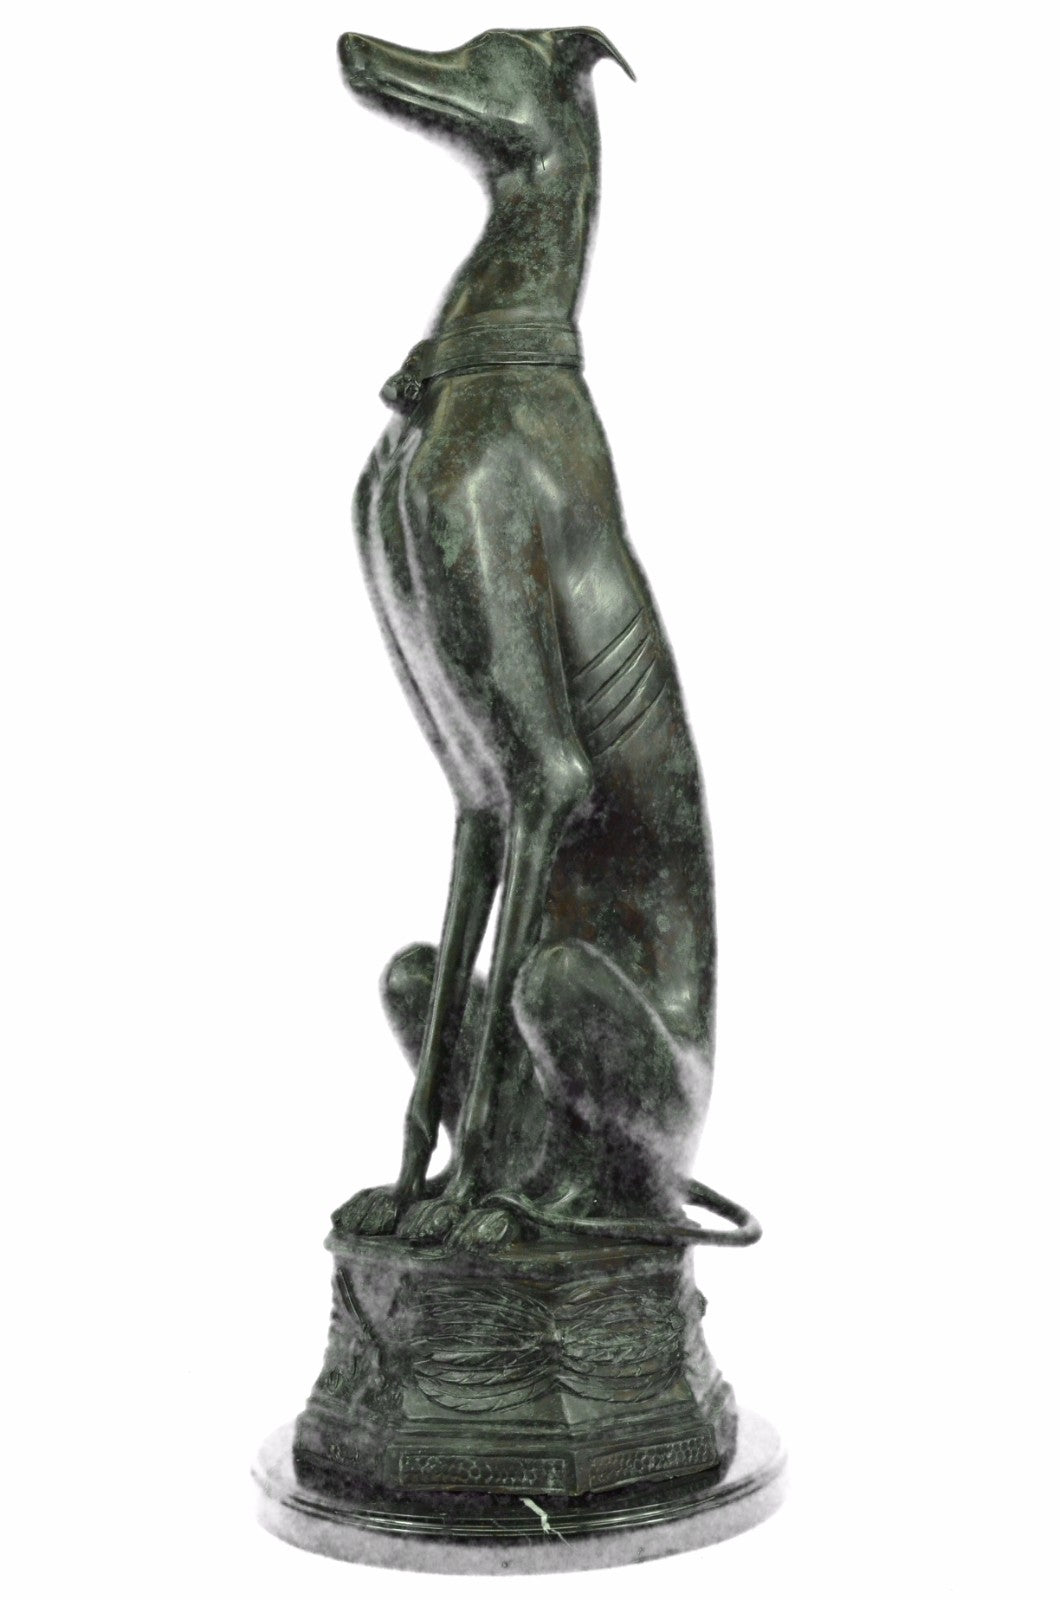 31" Tall Italian Greyhound with Special Patina Bronze Artwork Sculpture Animal